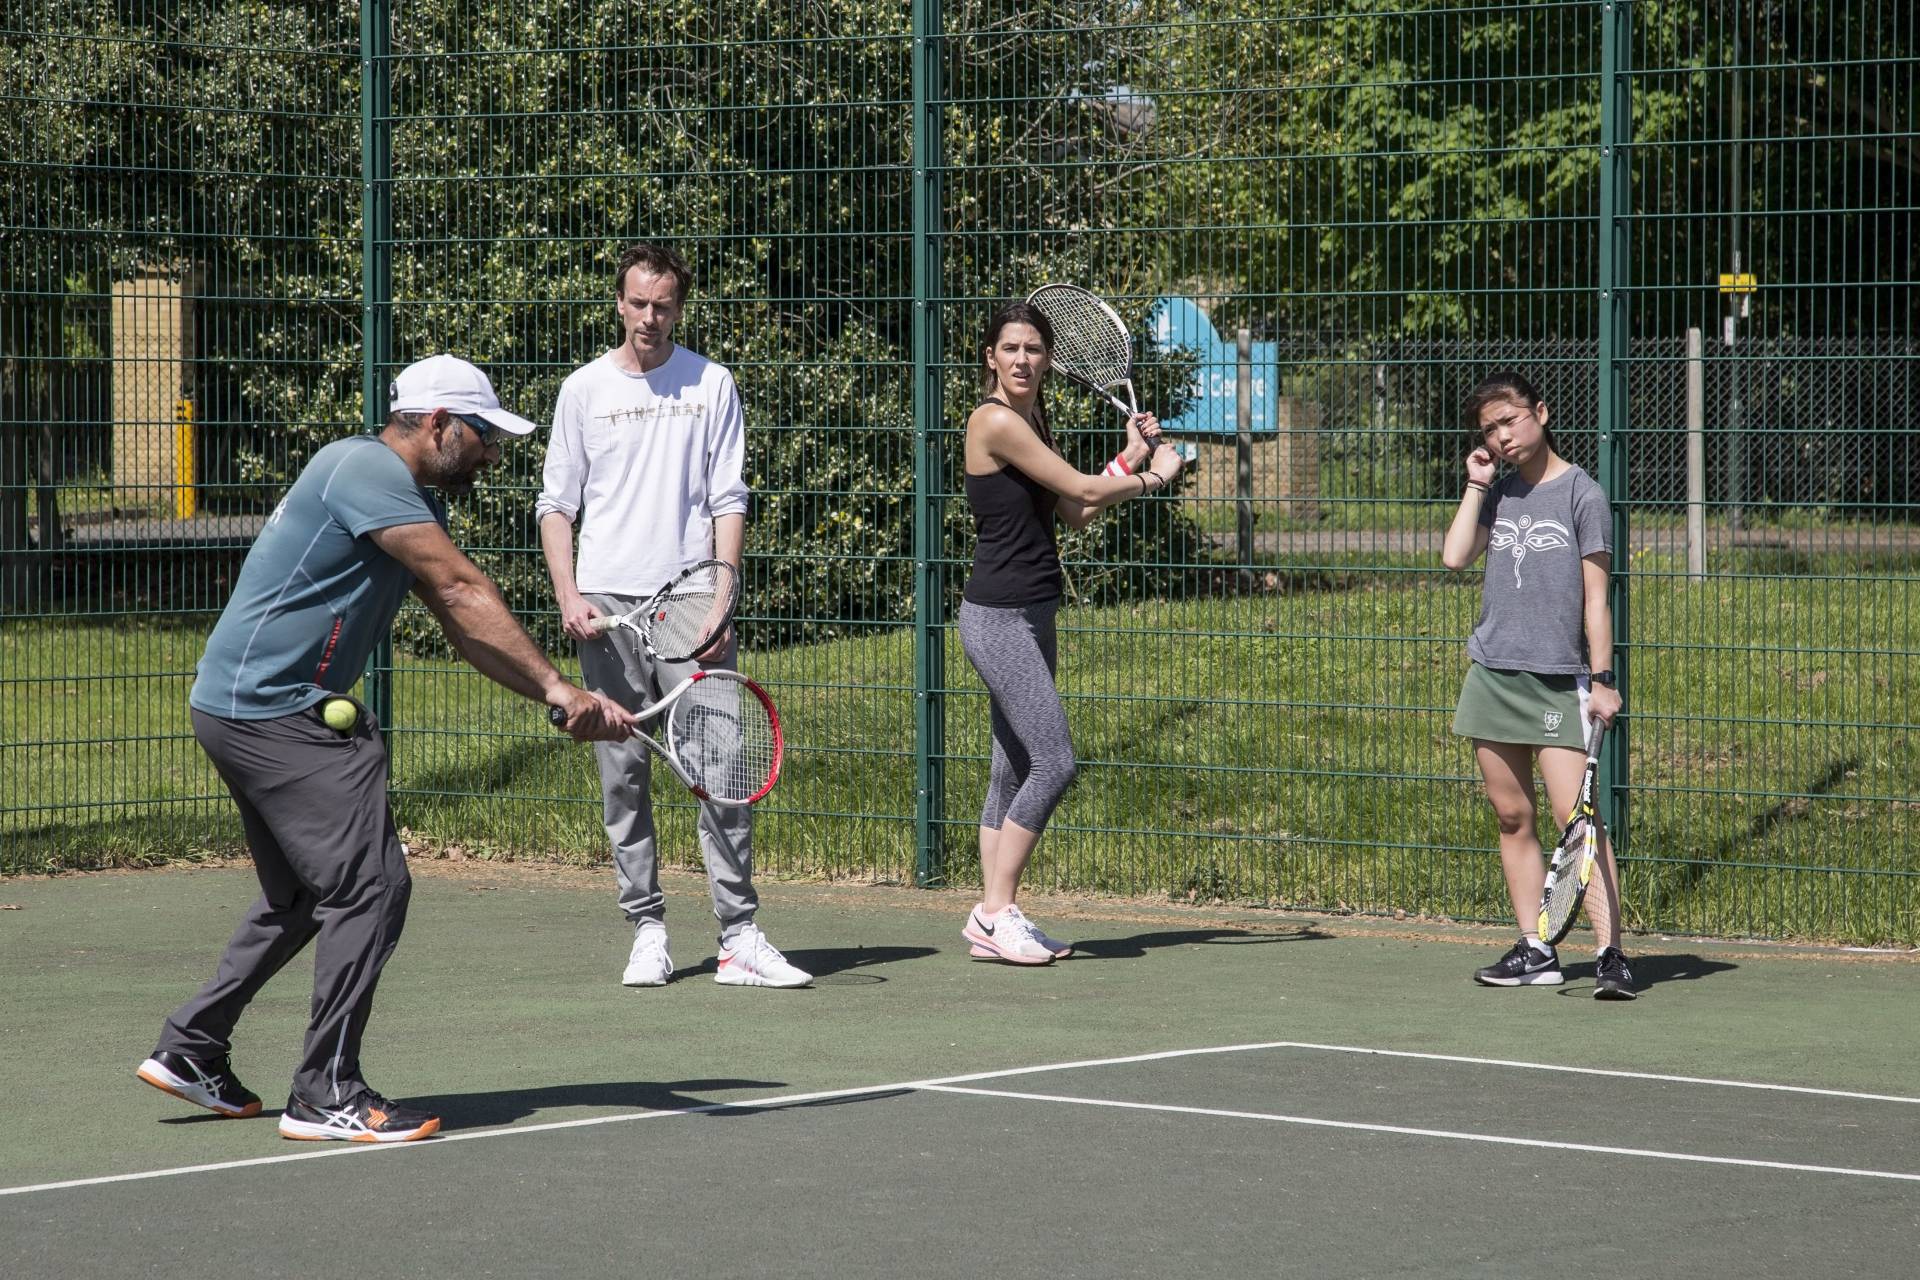 Beginners Tennis Coaching London - Beginners Tennis ...